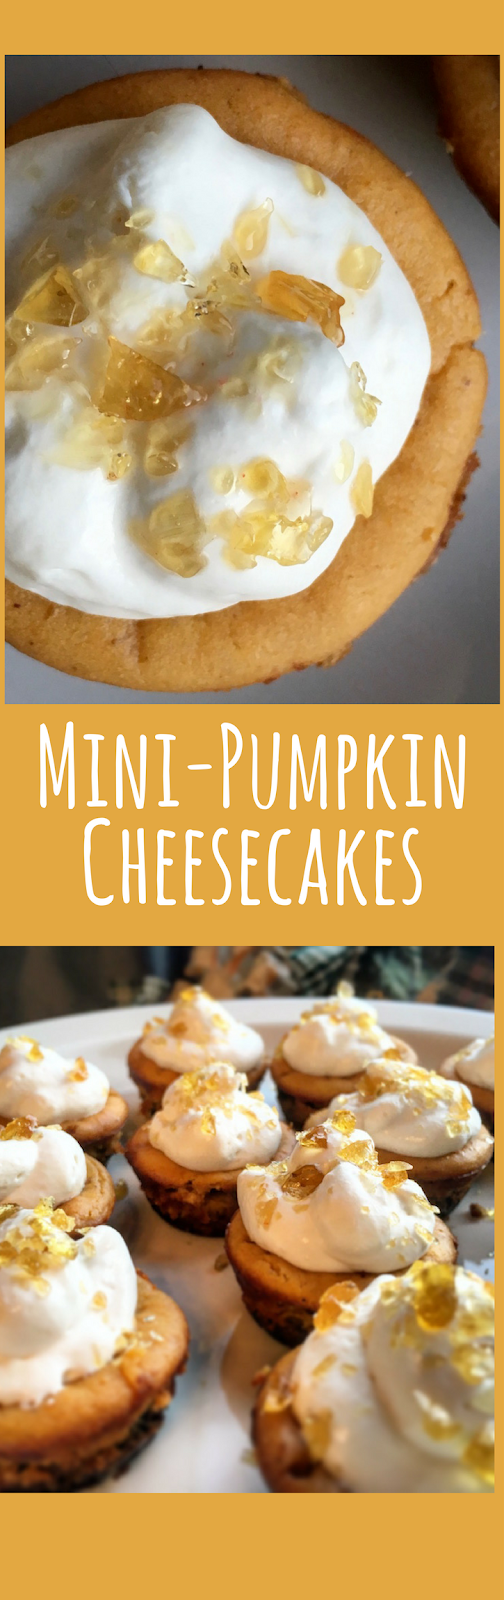 Mini Pumpkin Cheesecake Recipe Perfect for Parties